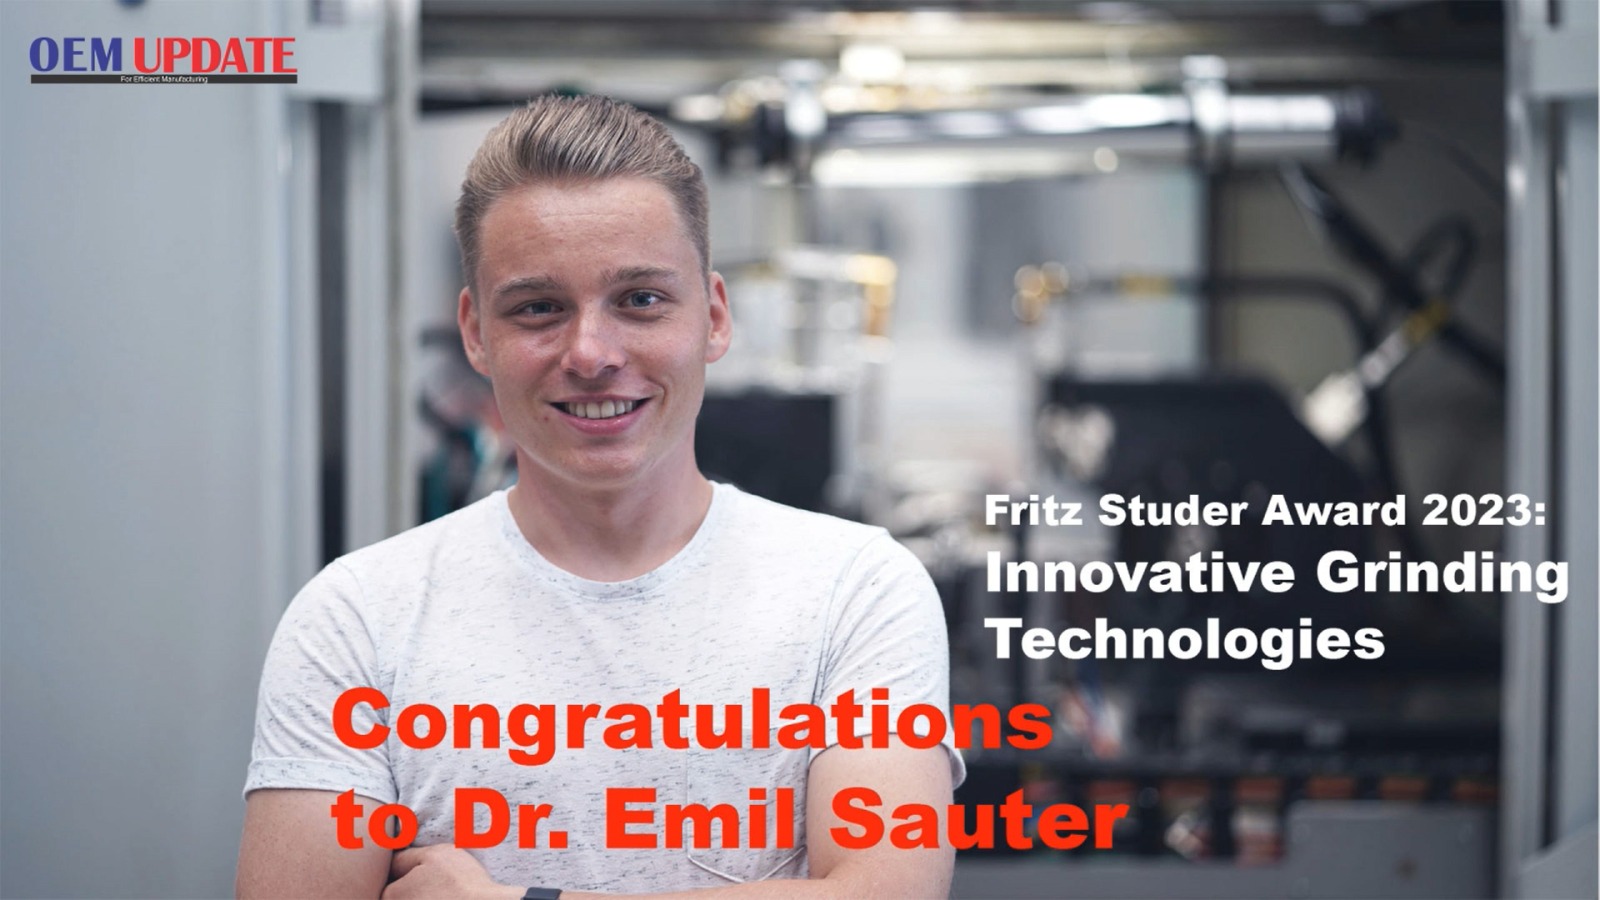 Fritz Studer Award 2023: Innovative Grinding Technologies congratulations to Dr. Emil Sauter